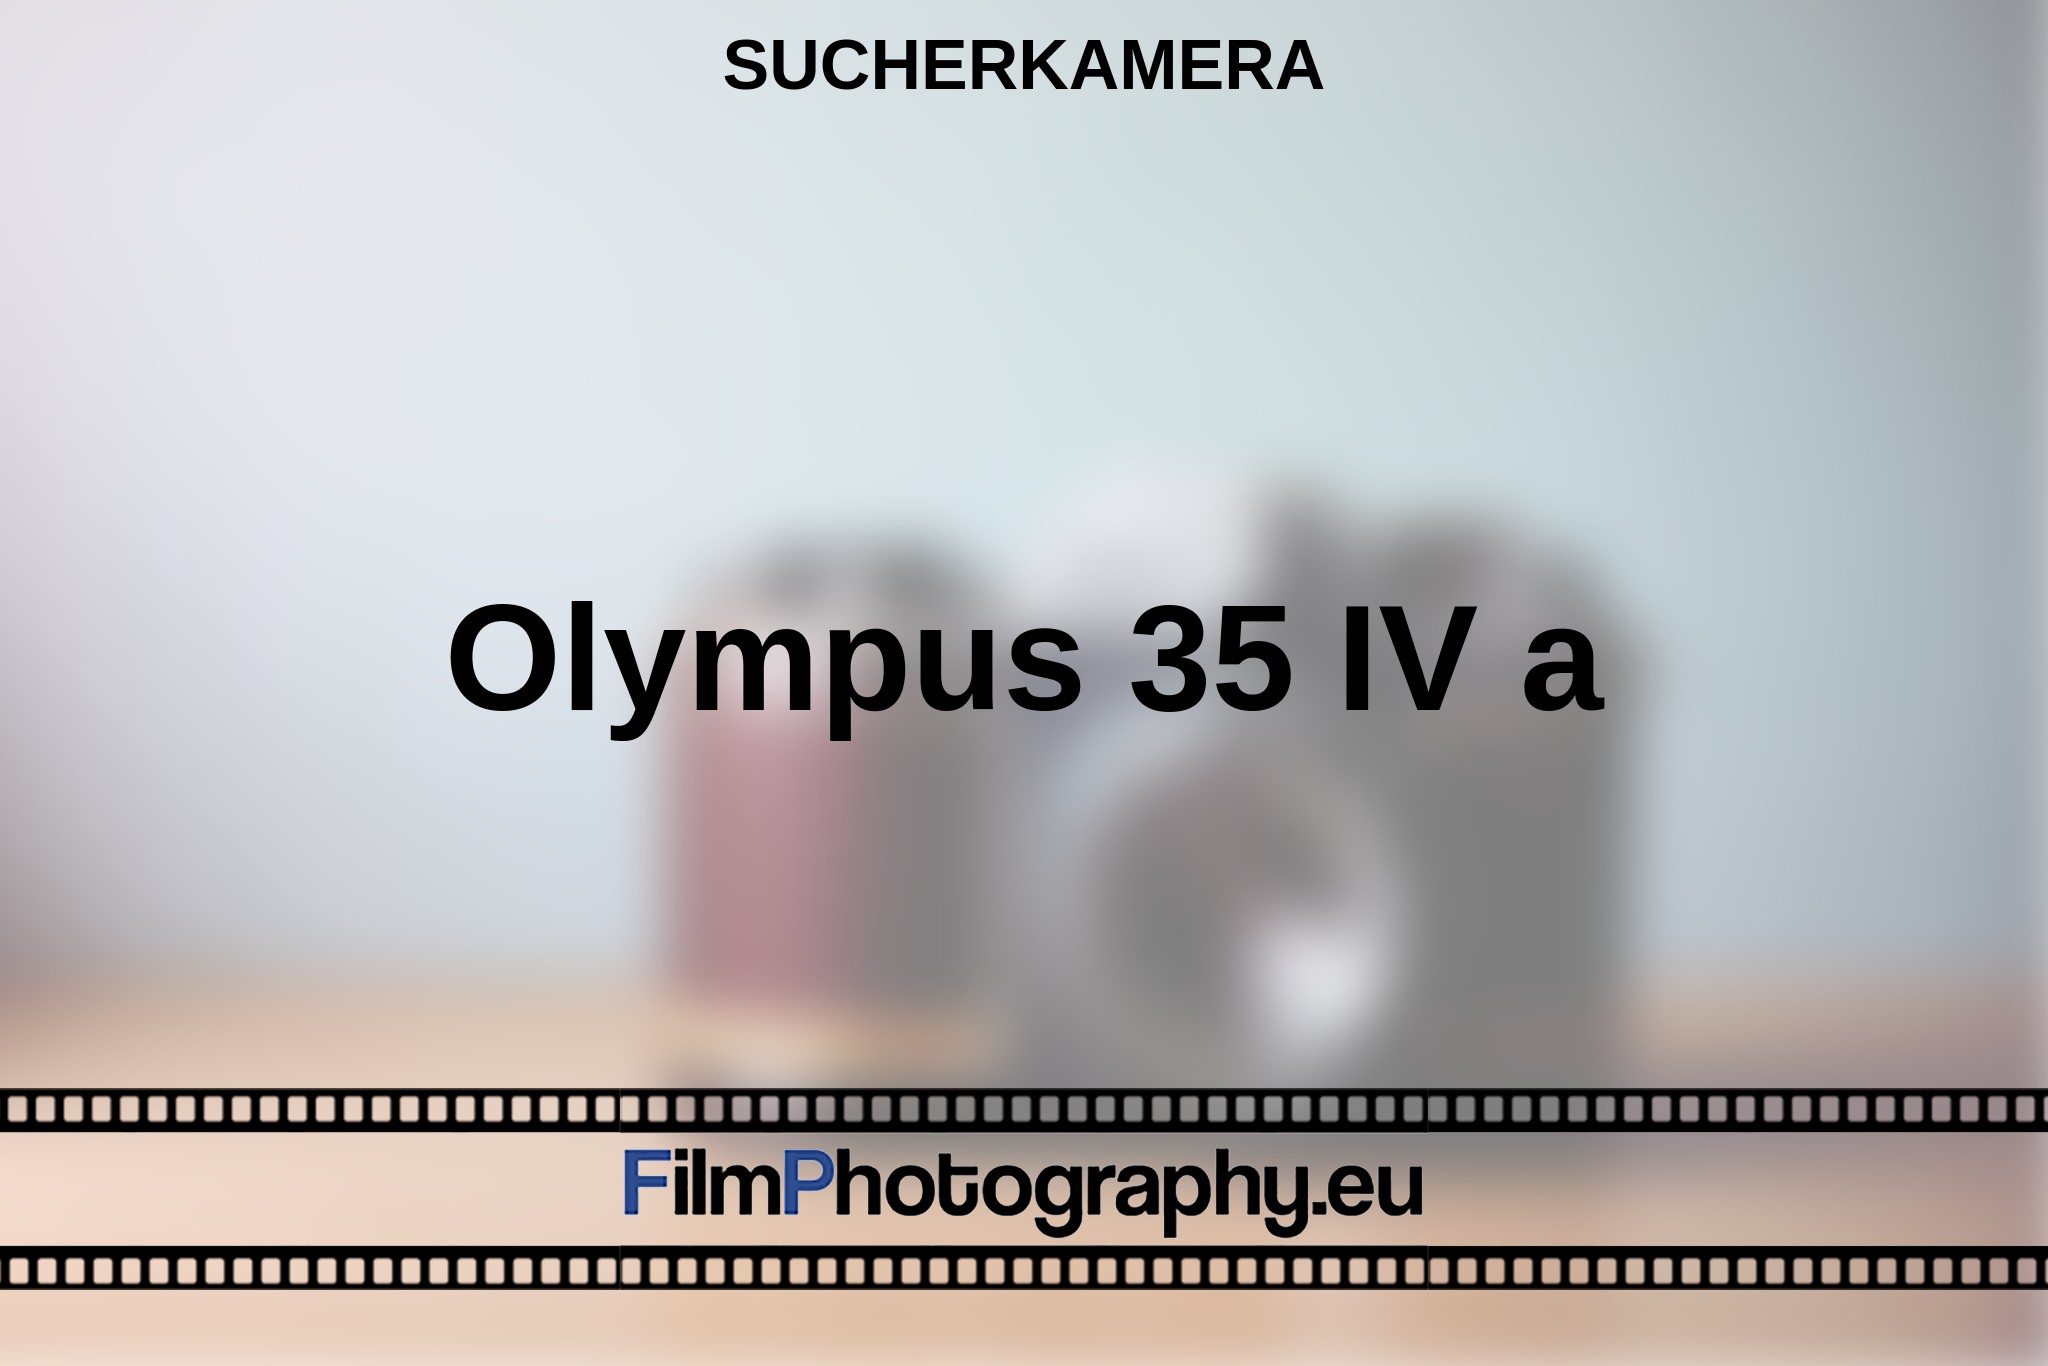 olympus-35-iv-a-sucherkamera-bnv.jpg